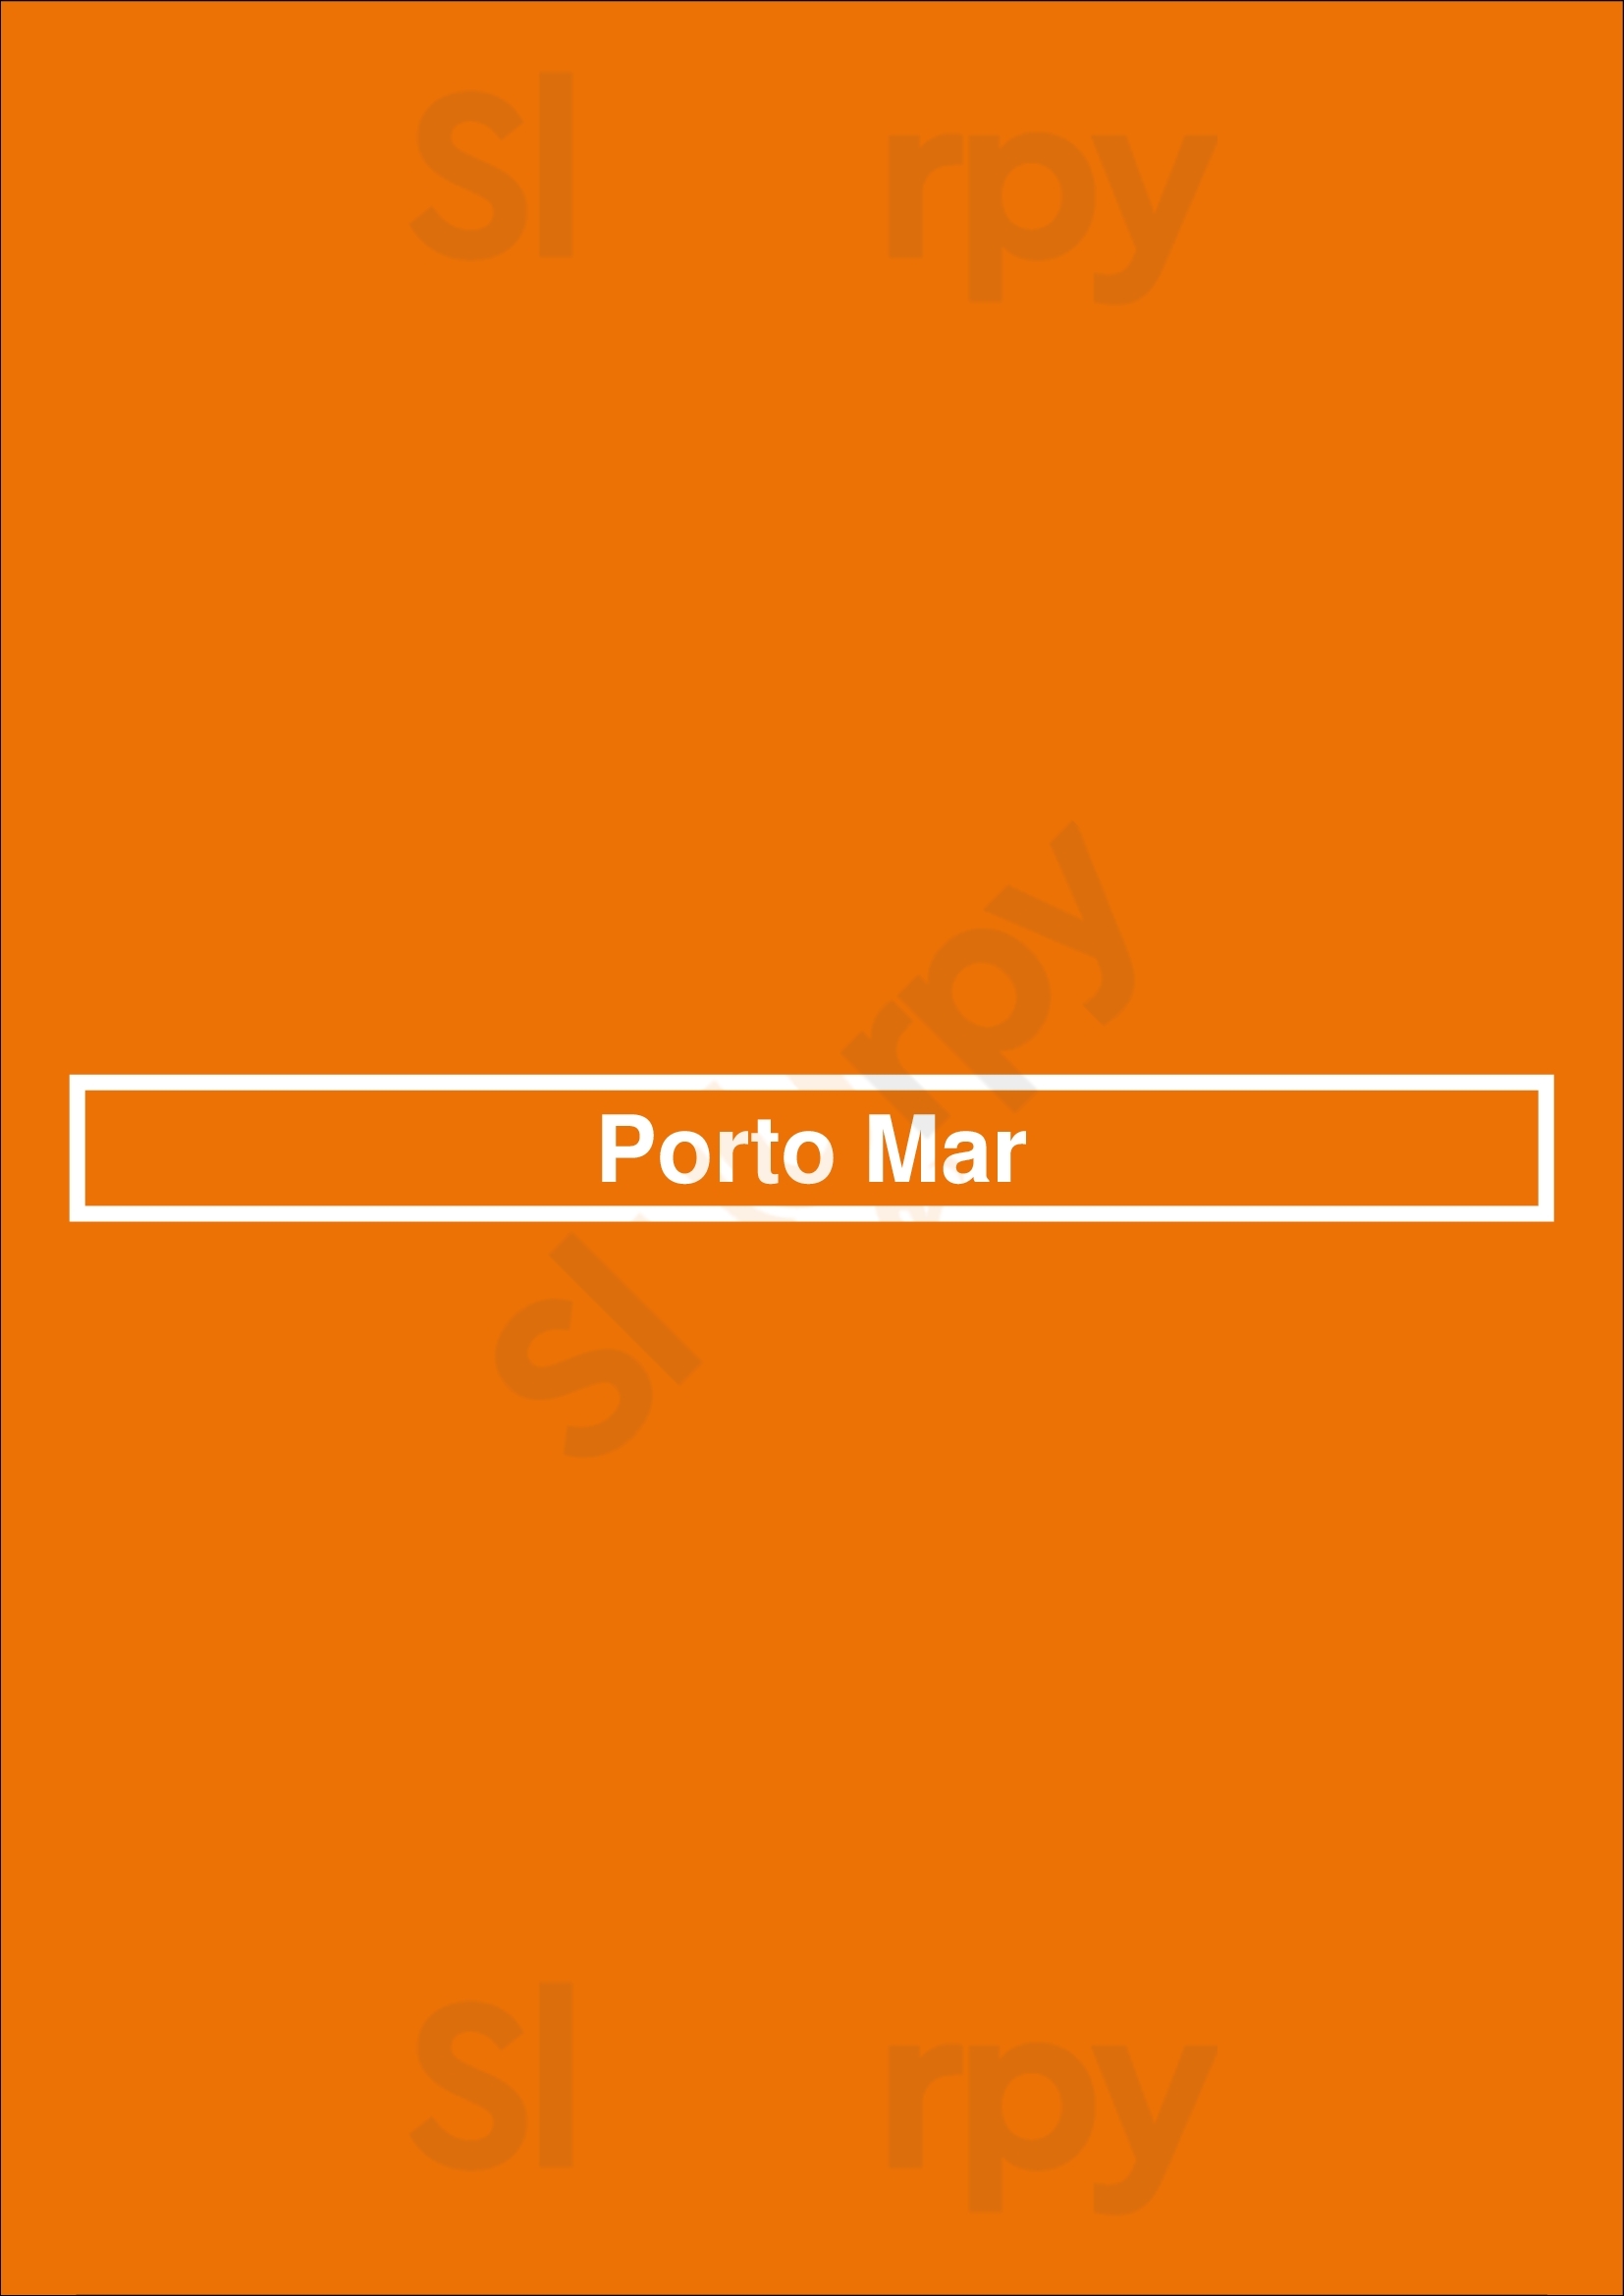 Porto Mar Montreal Menu - 1